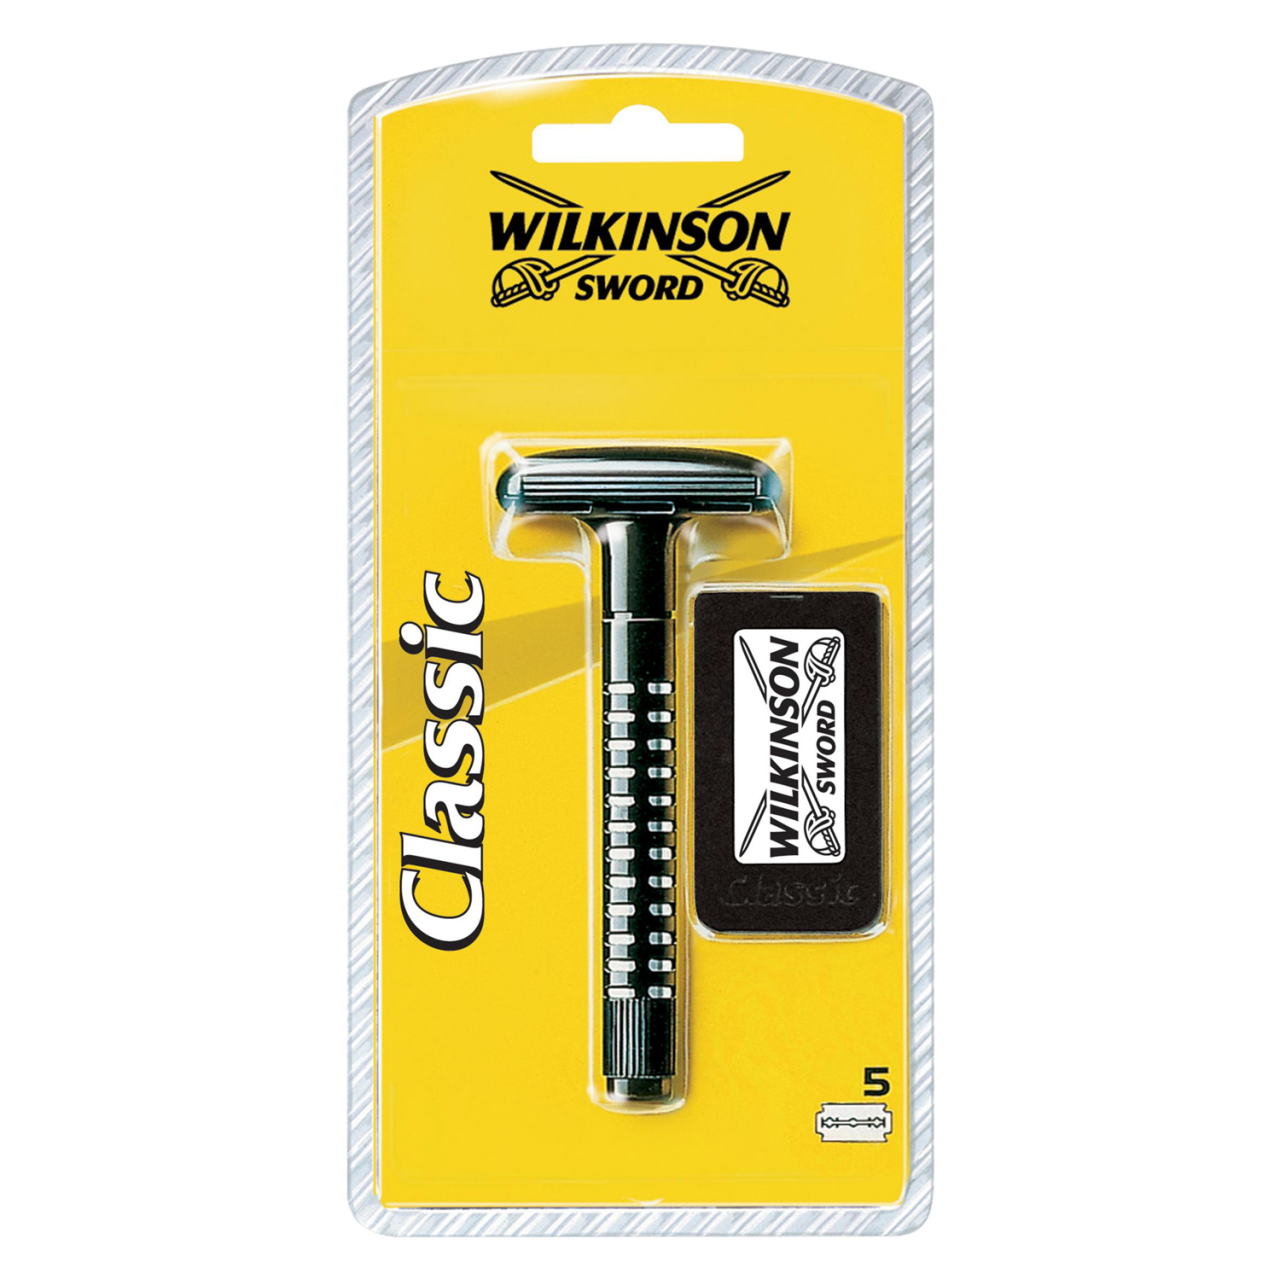 Wilkinson Classic - Rasierer Doppelklingen + 5 Klingen von Wilkinson